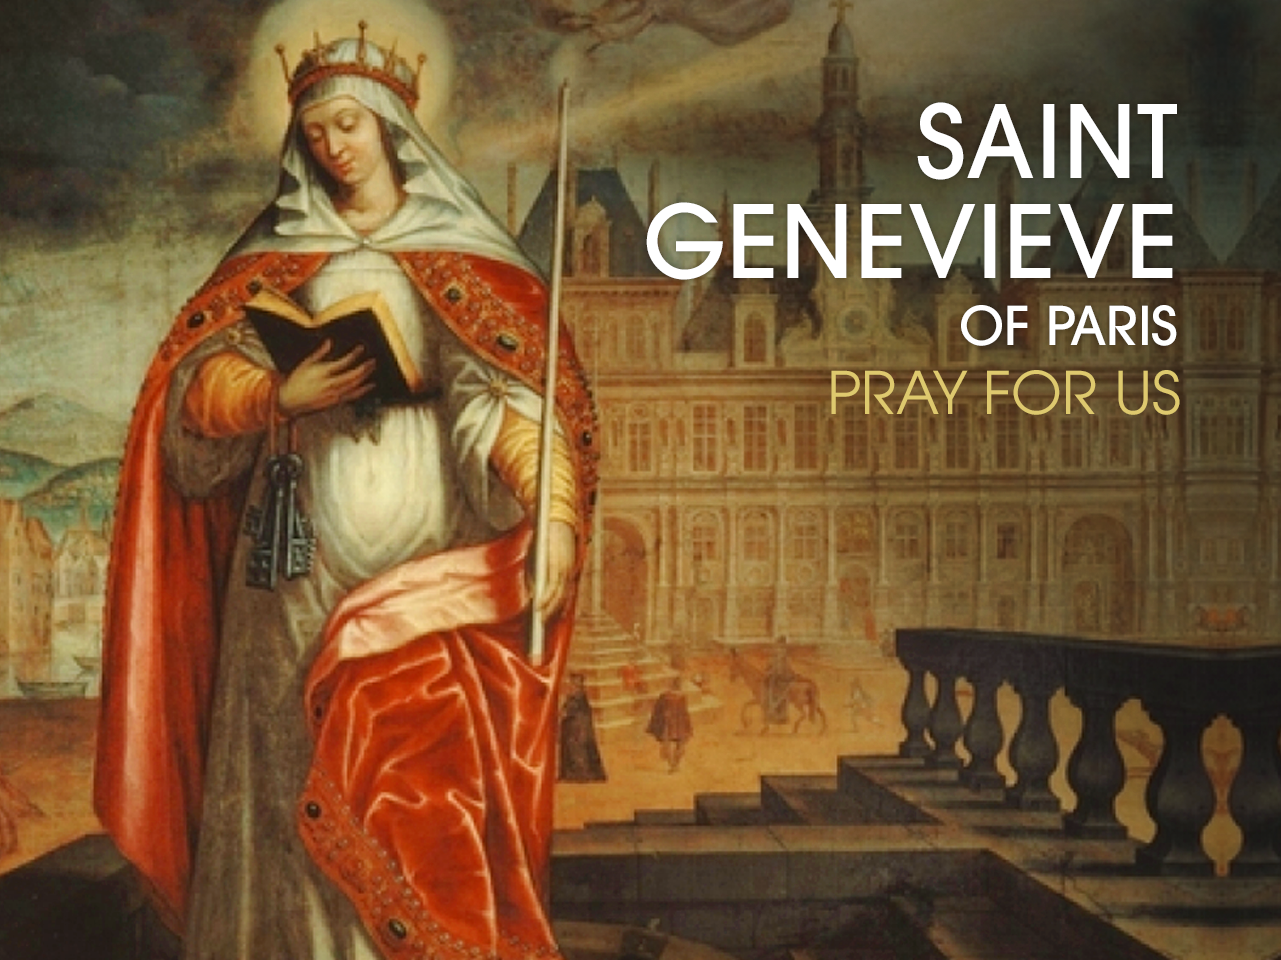 St. Genevieve of Paris